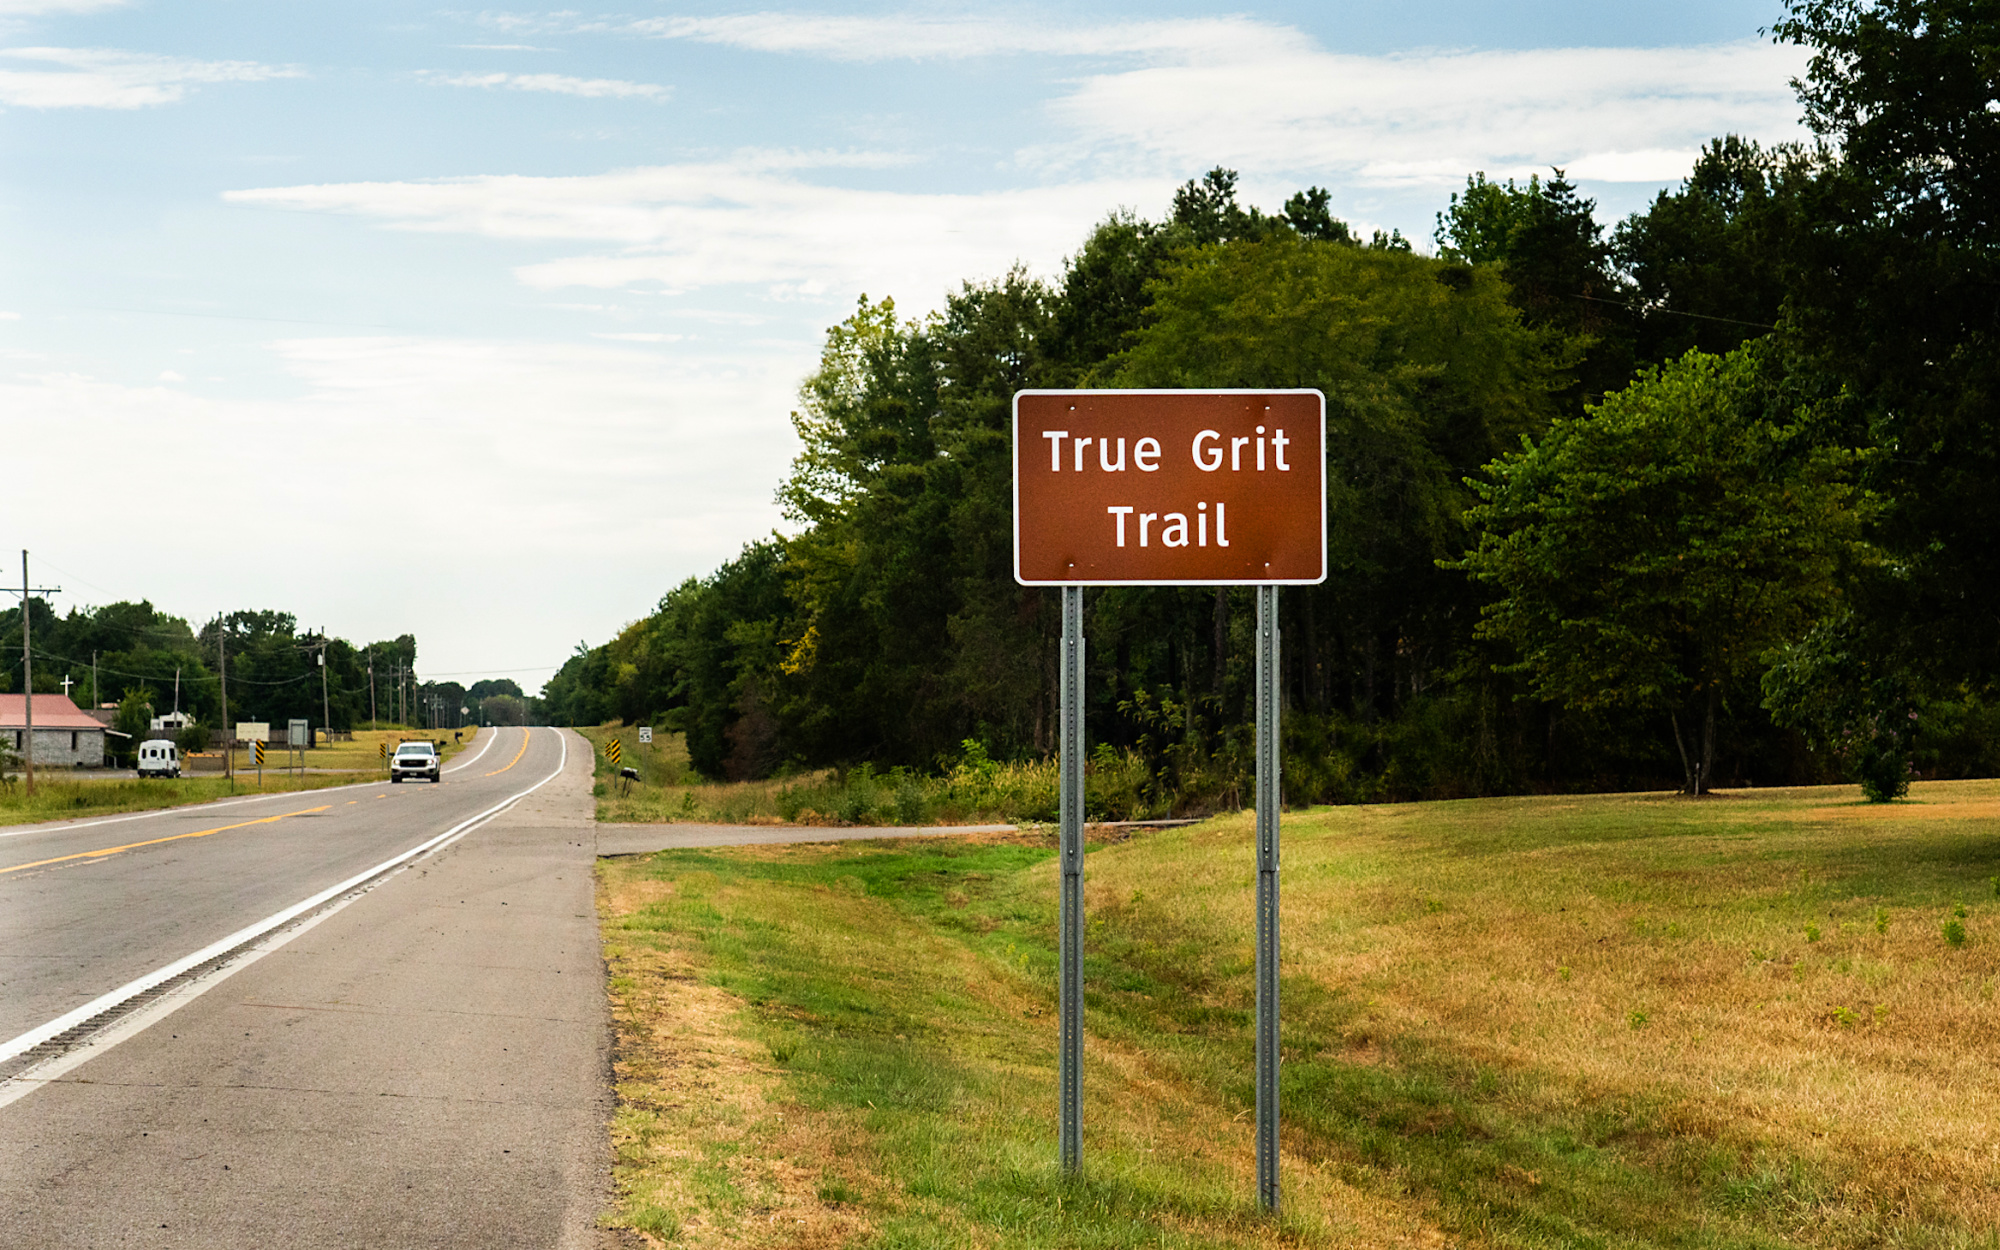 True Grit Trail